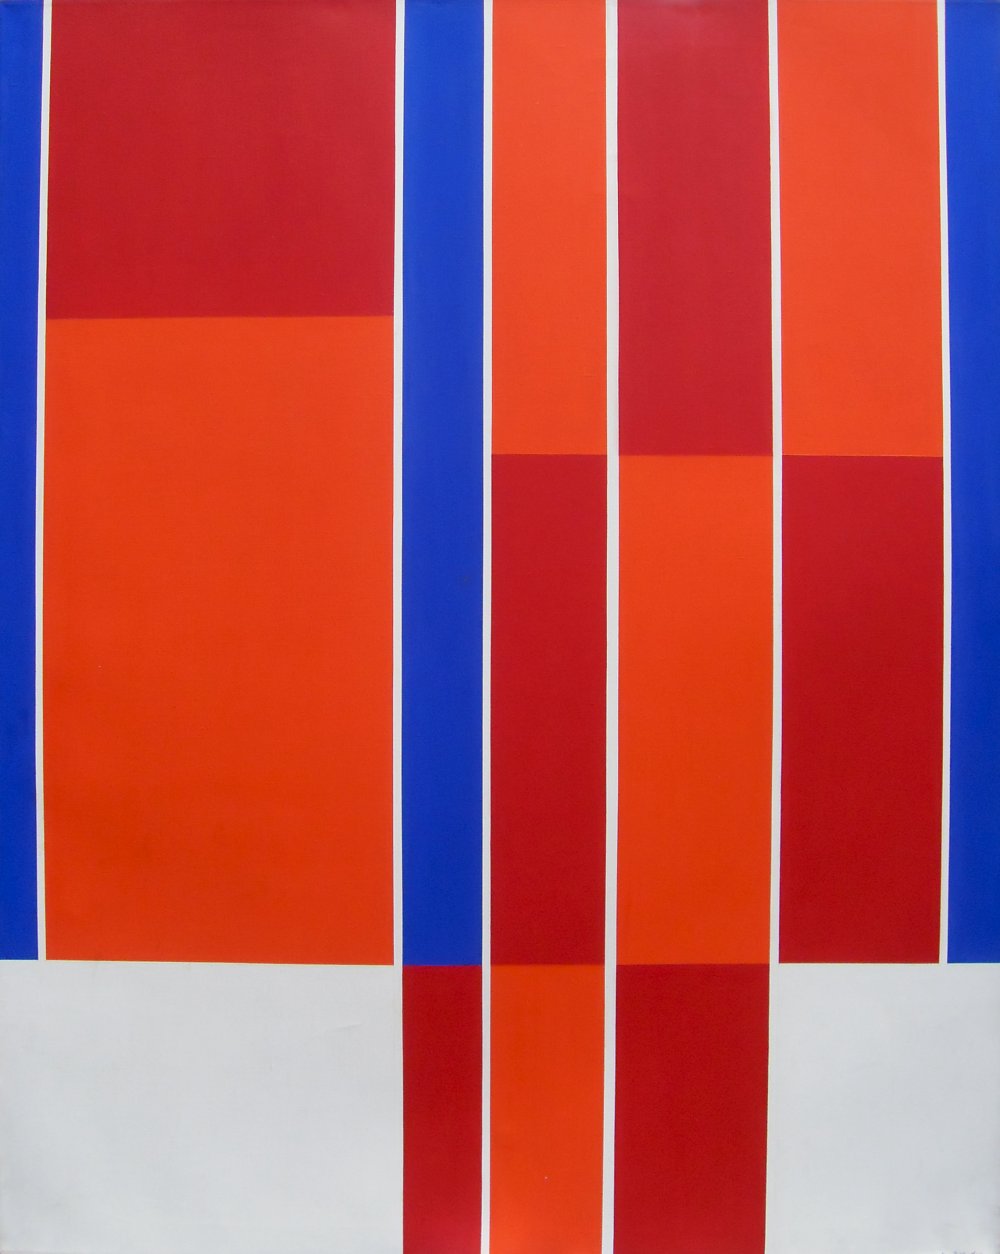 Ilya Bolotowsky, Red, Blue, White Rectangles, 1973